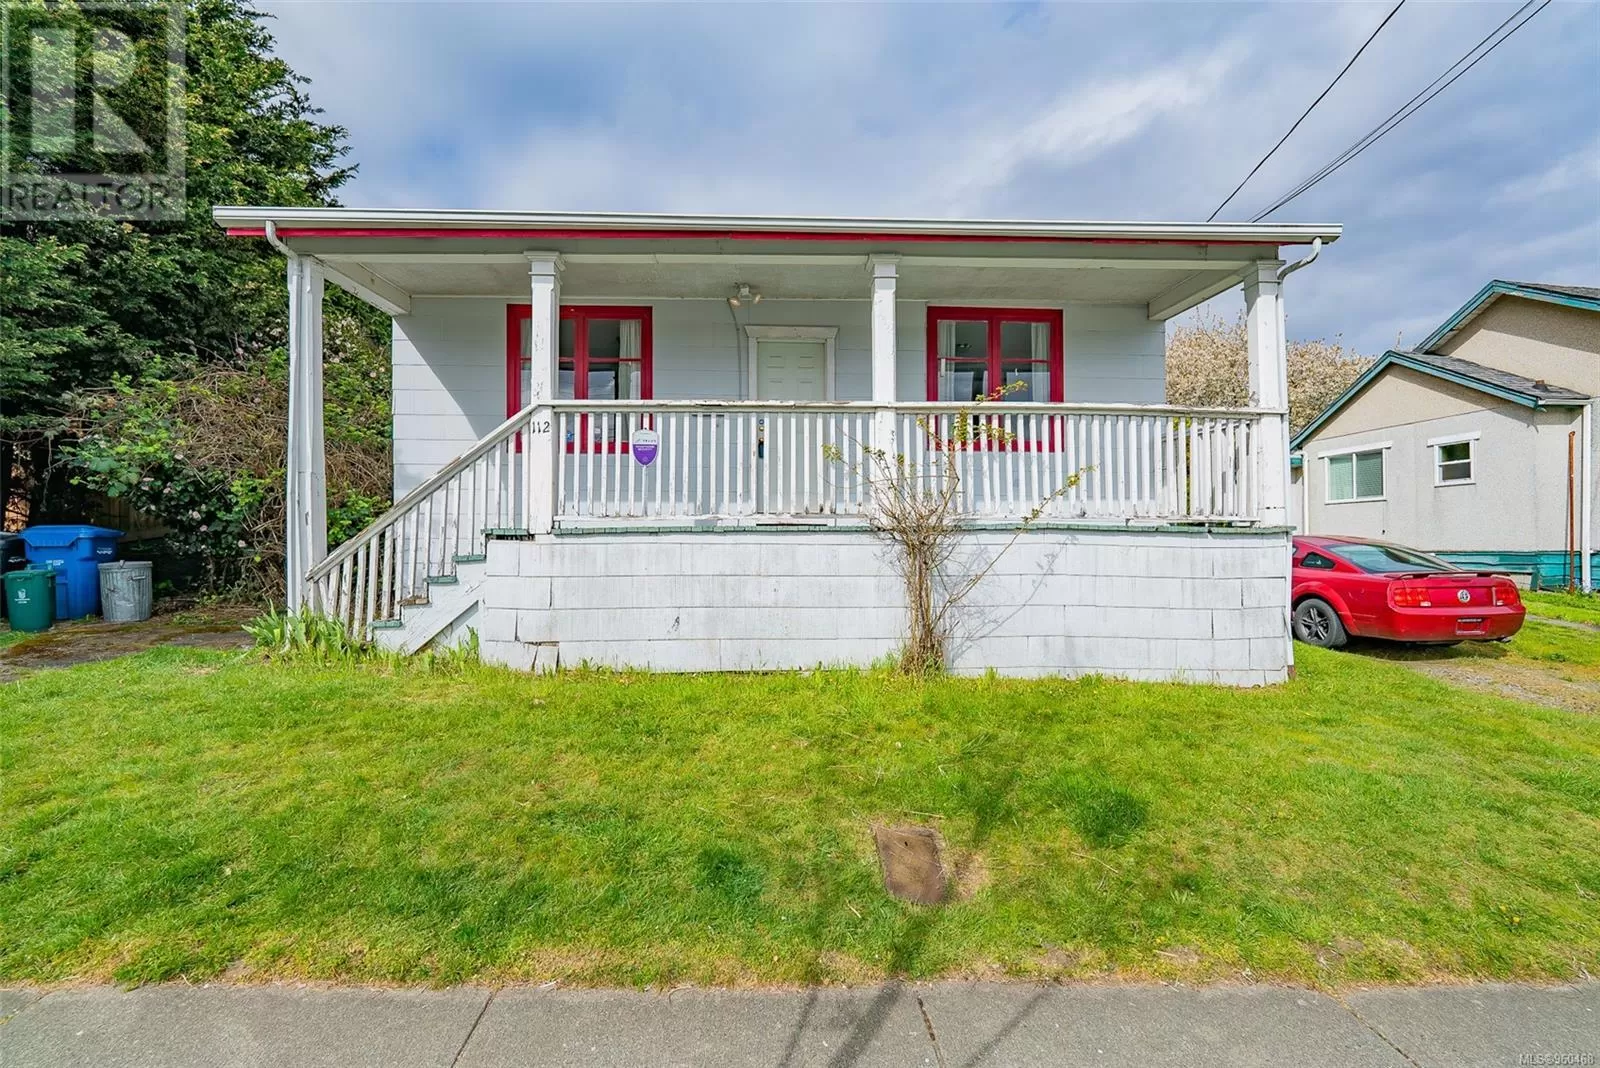 House for rent: 112 Irwin St, Nanaimo, British Columbia V9R 4X2